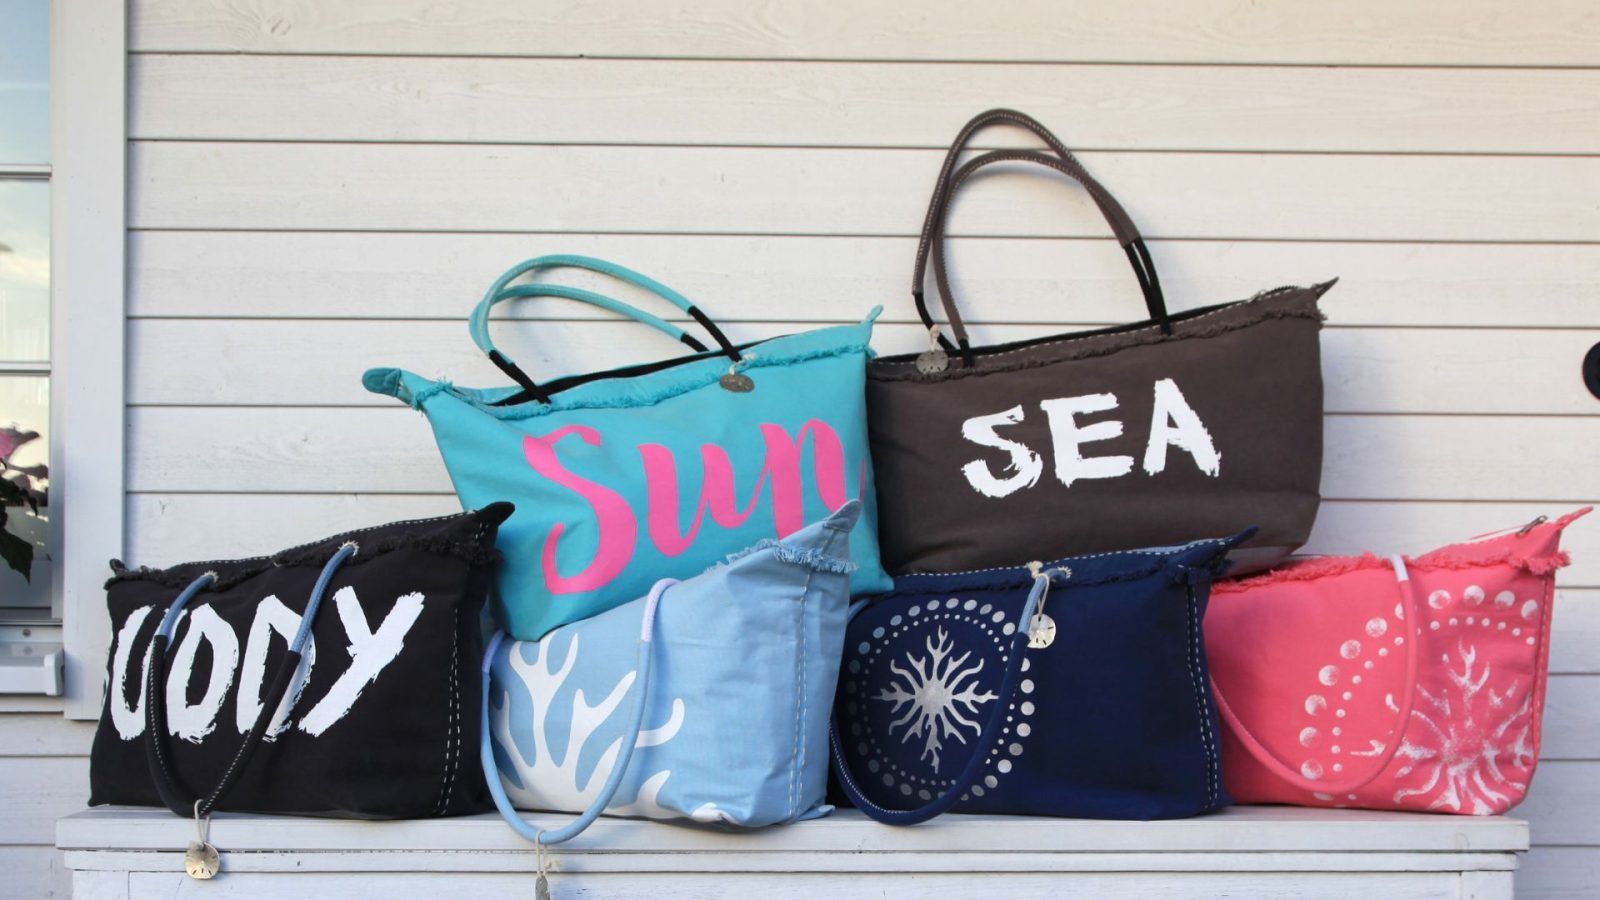 Designer Tote Bags Australia: The Best Luxury Tote Bags To Shop - Vogue  Australia